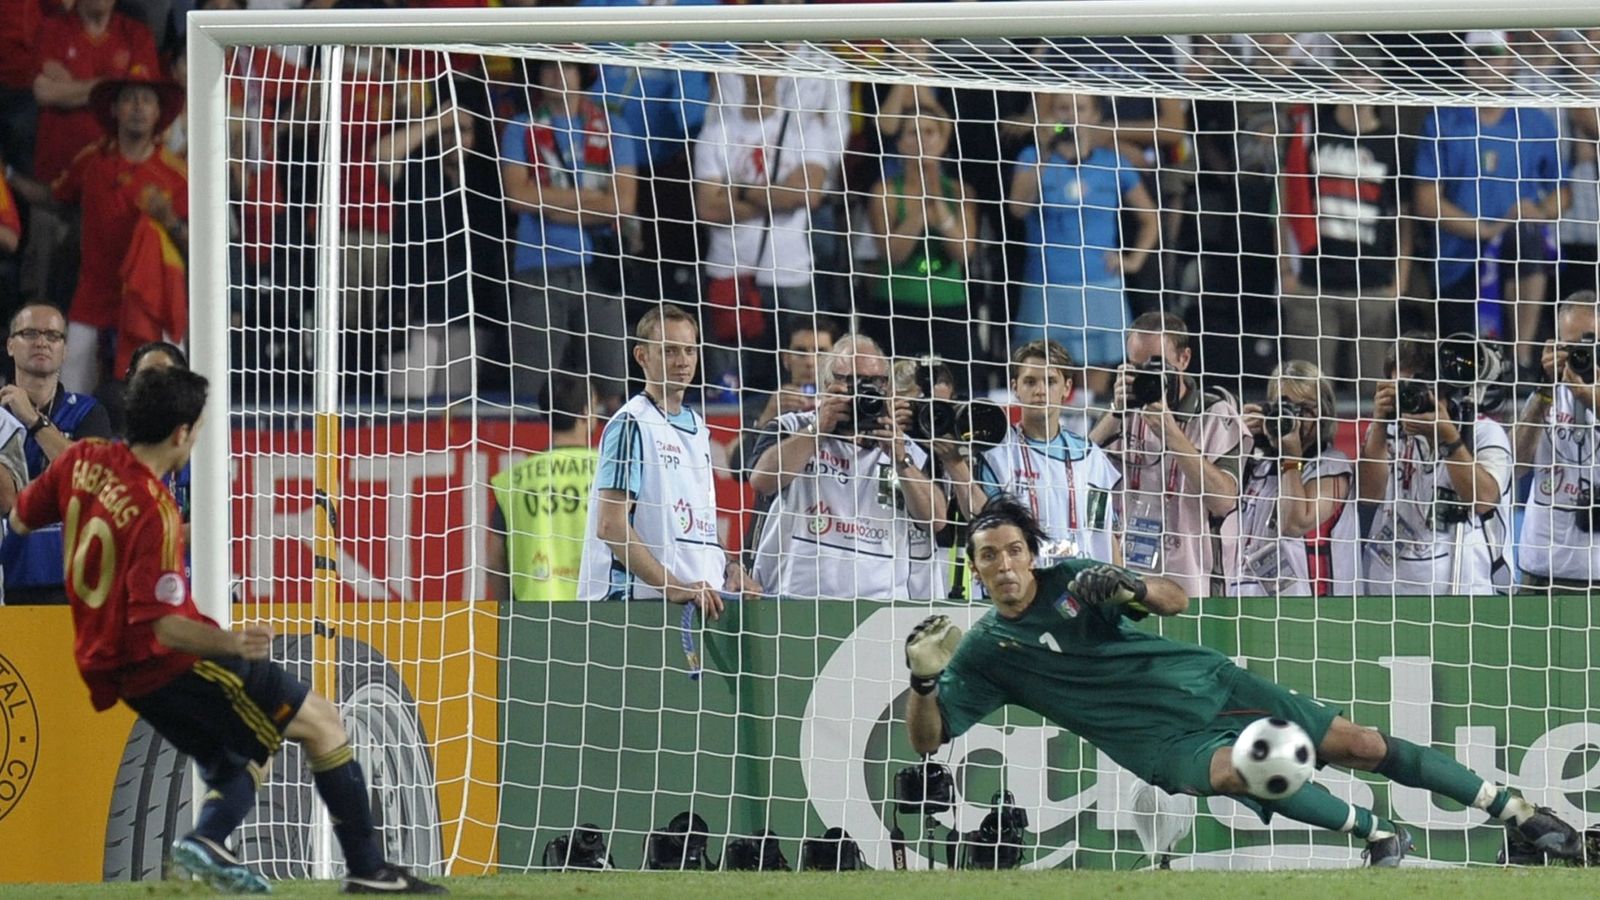 Foto: Cesc marca el penalti decisivo en la tanda de penaltis de los cuartos de final de la Eurocopa 2008 (Félix Ordoñez/Reuters